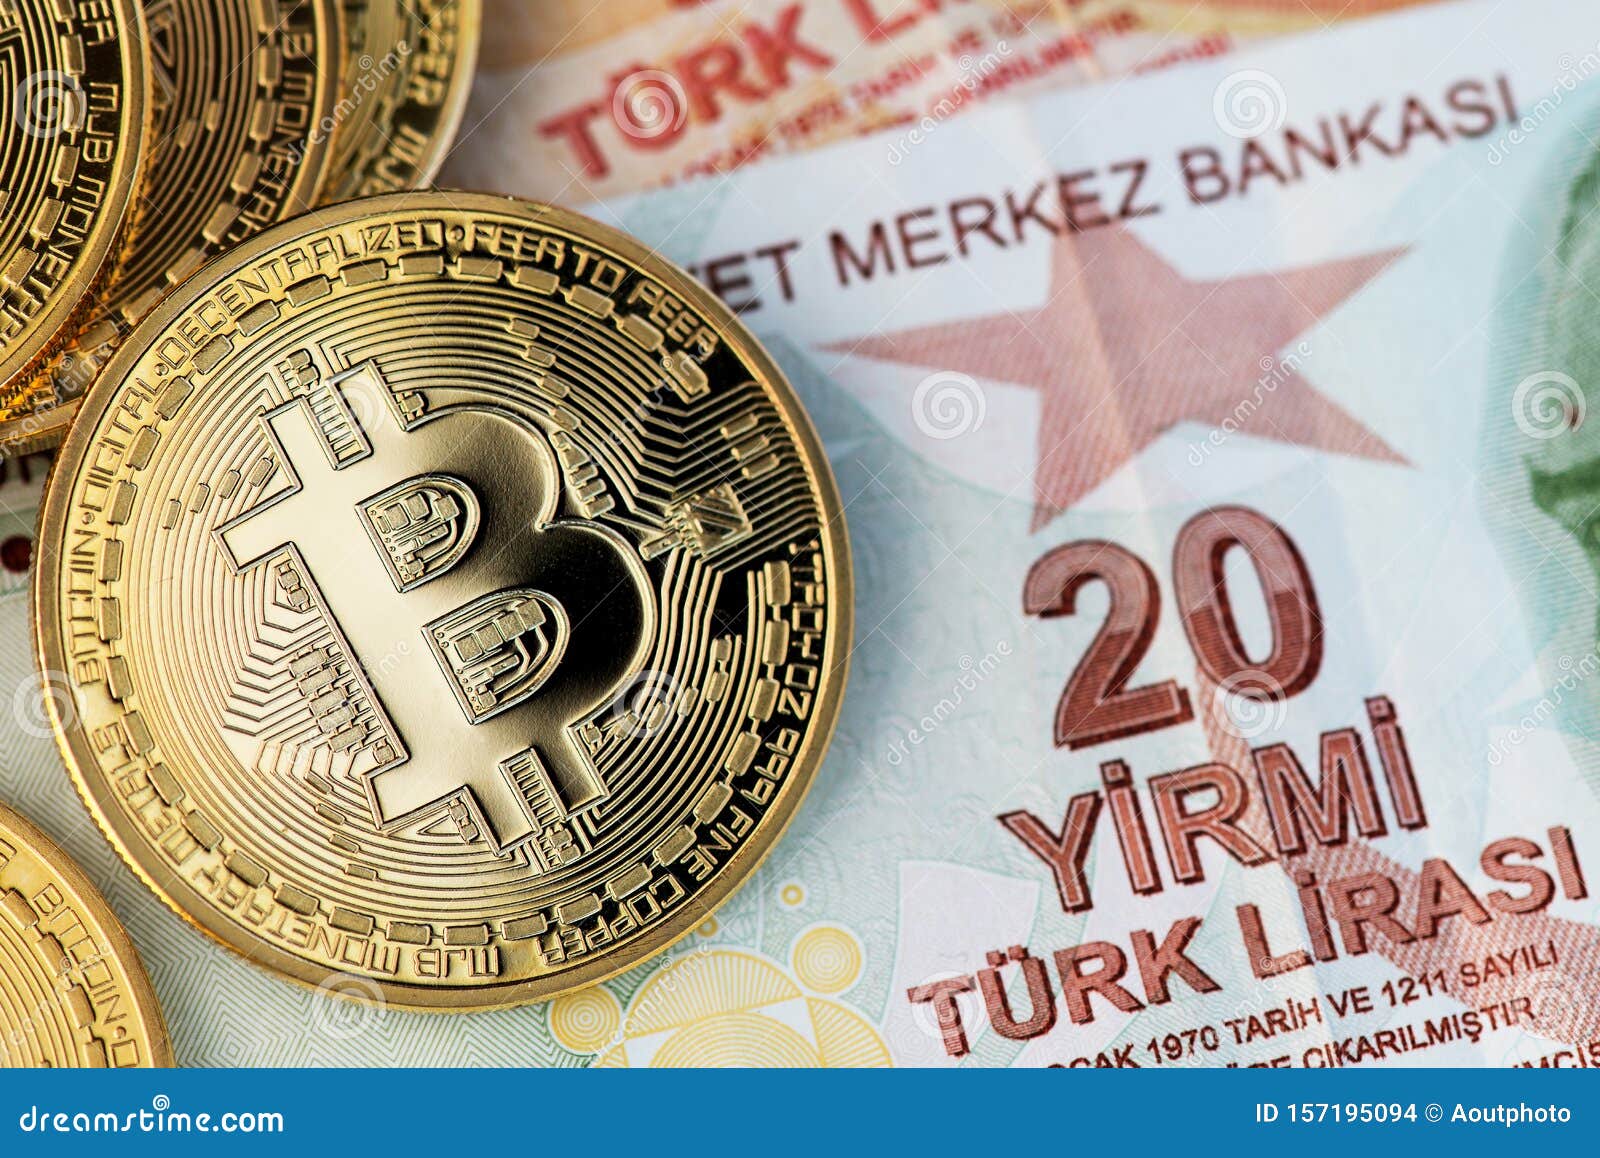 1 bitcoin to turkish lira